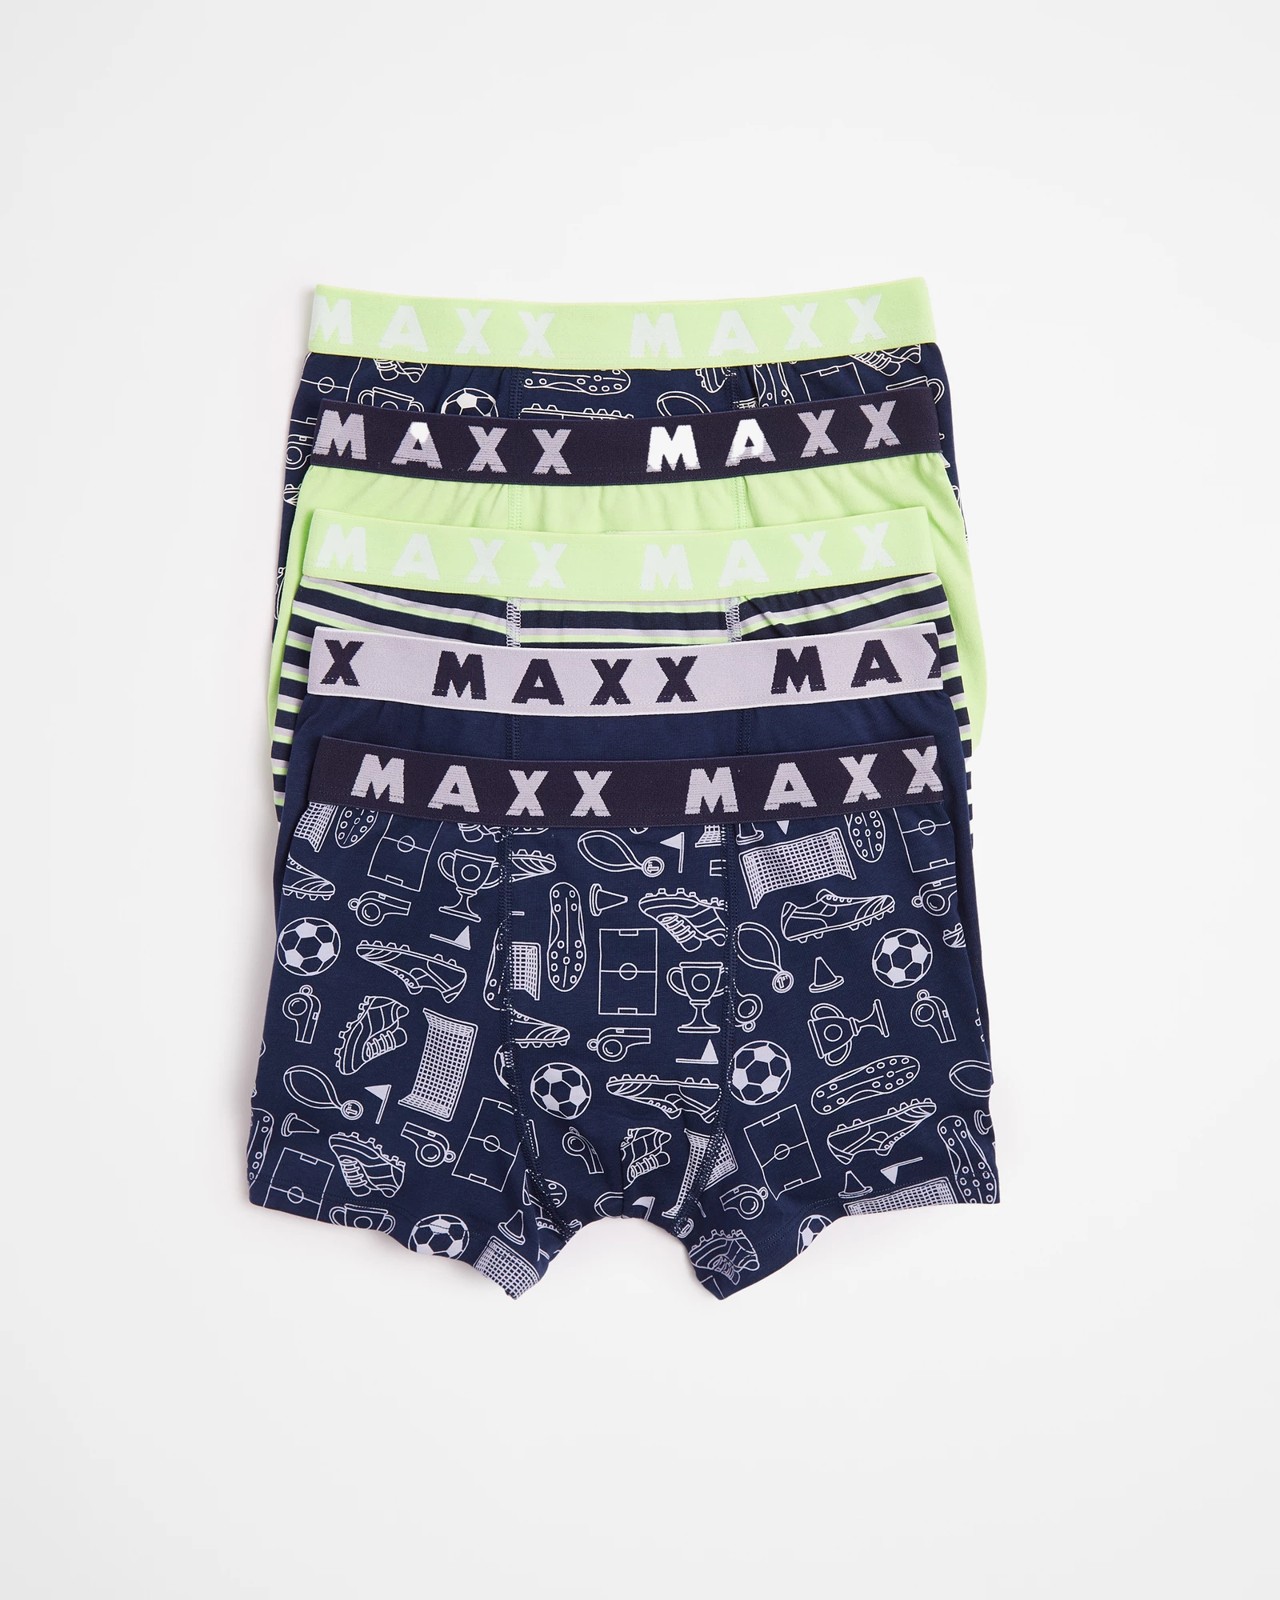 Maxx trunks / boxers / underwear 8-10, Babies & Kids, Babies